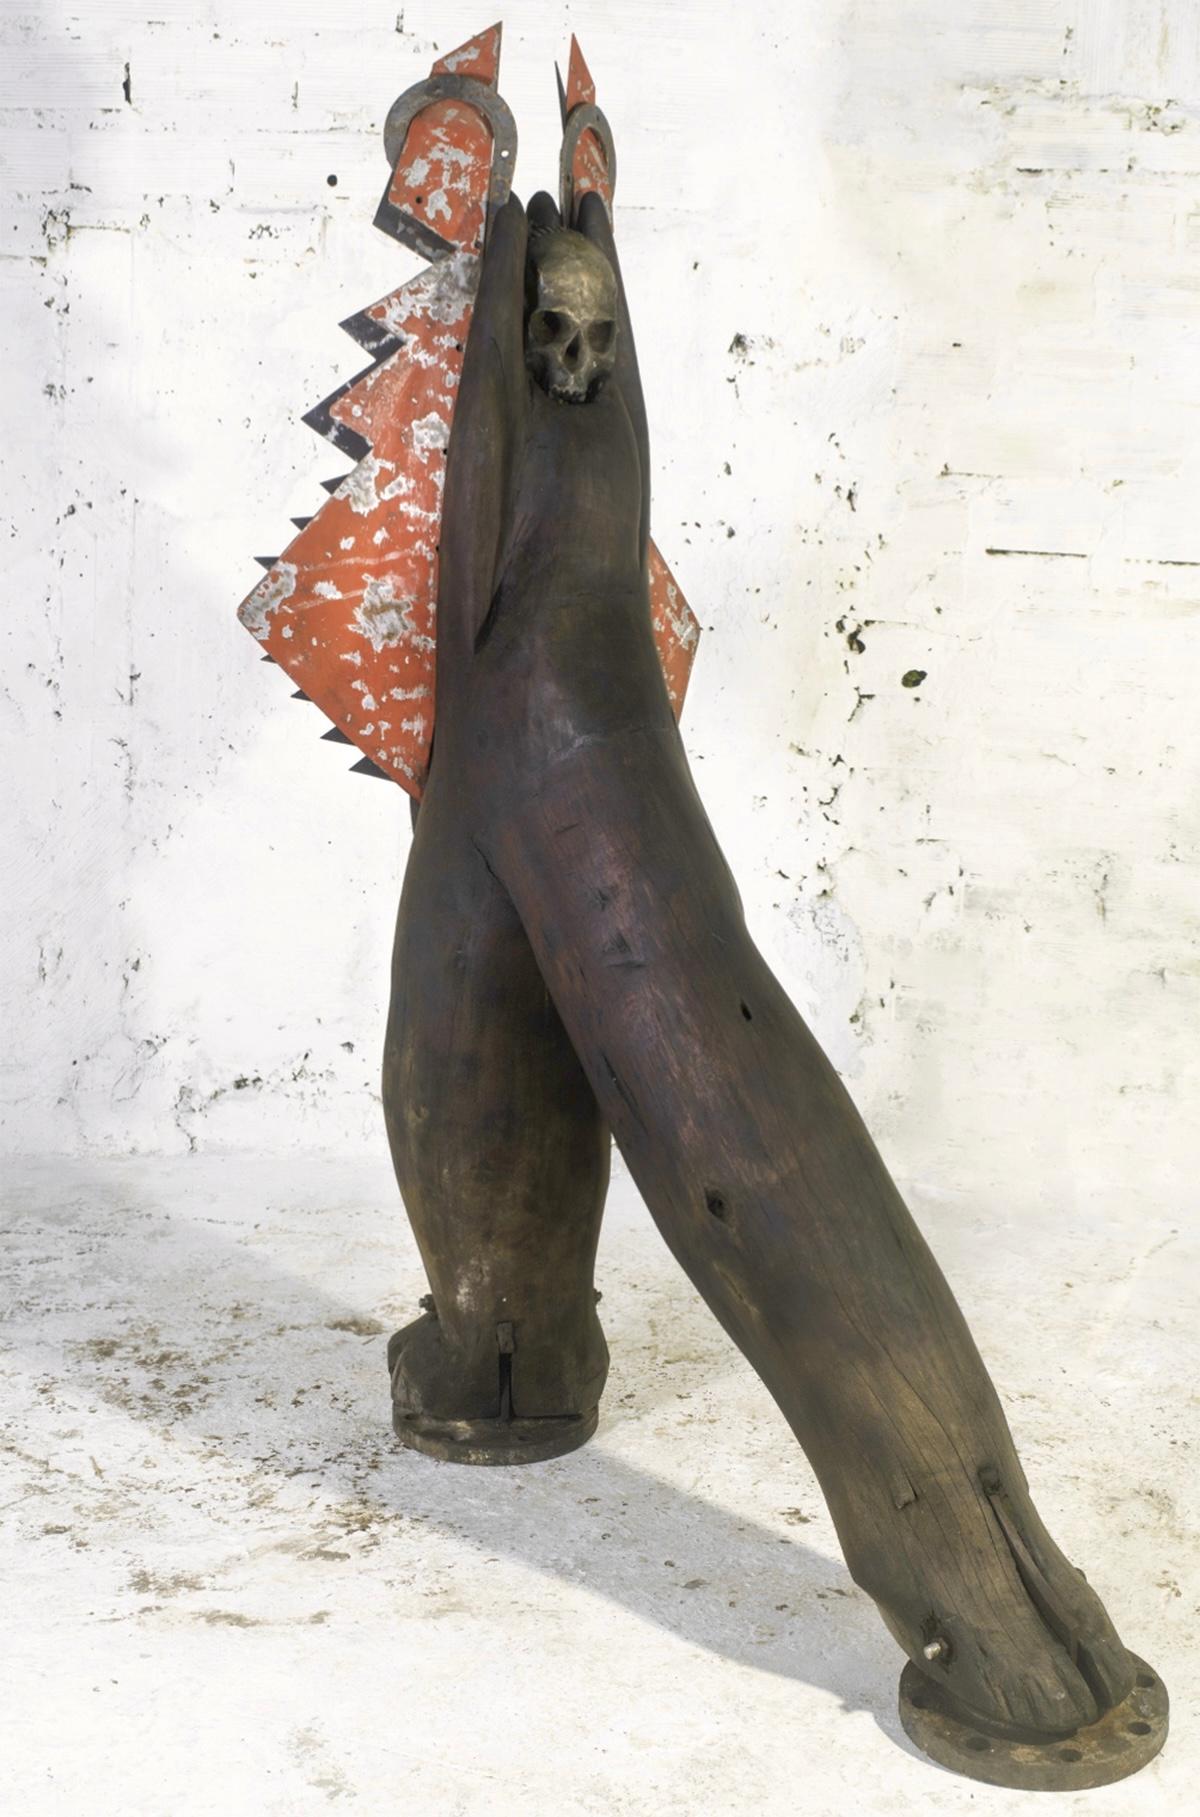 ORÍ GUERREIRA TUPINANDACARU I, Figurative Bildhauerei. Skulpturen aus der Serie Skulpturen – Sculpture von José Ignacio Suarez Solis